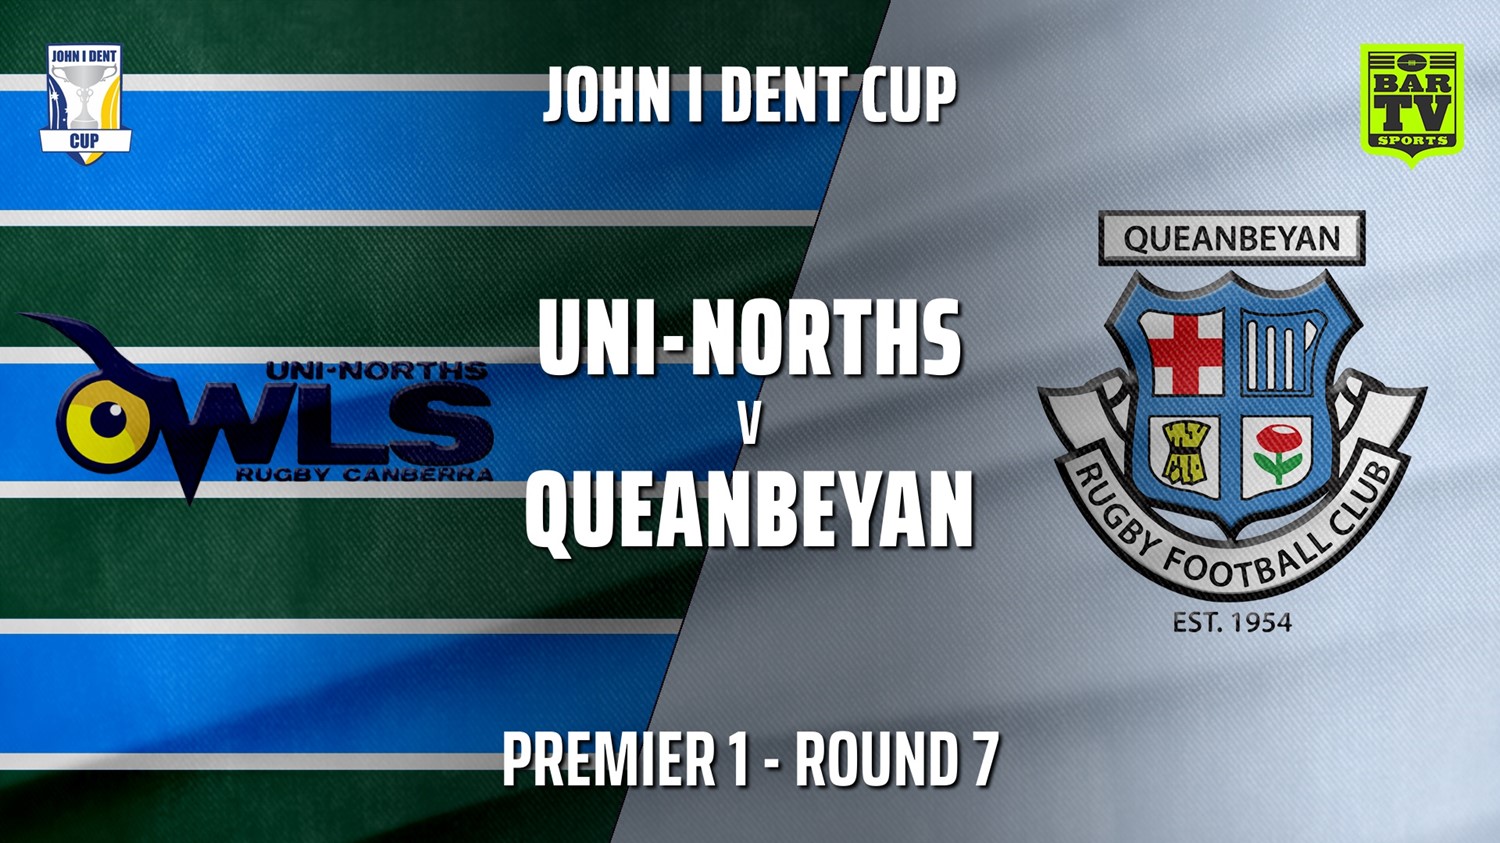 210605-John I Dent Round 7 - Premier 1 - UNI-Norths v Queanbeyan Whites Minigame Slate Image